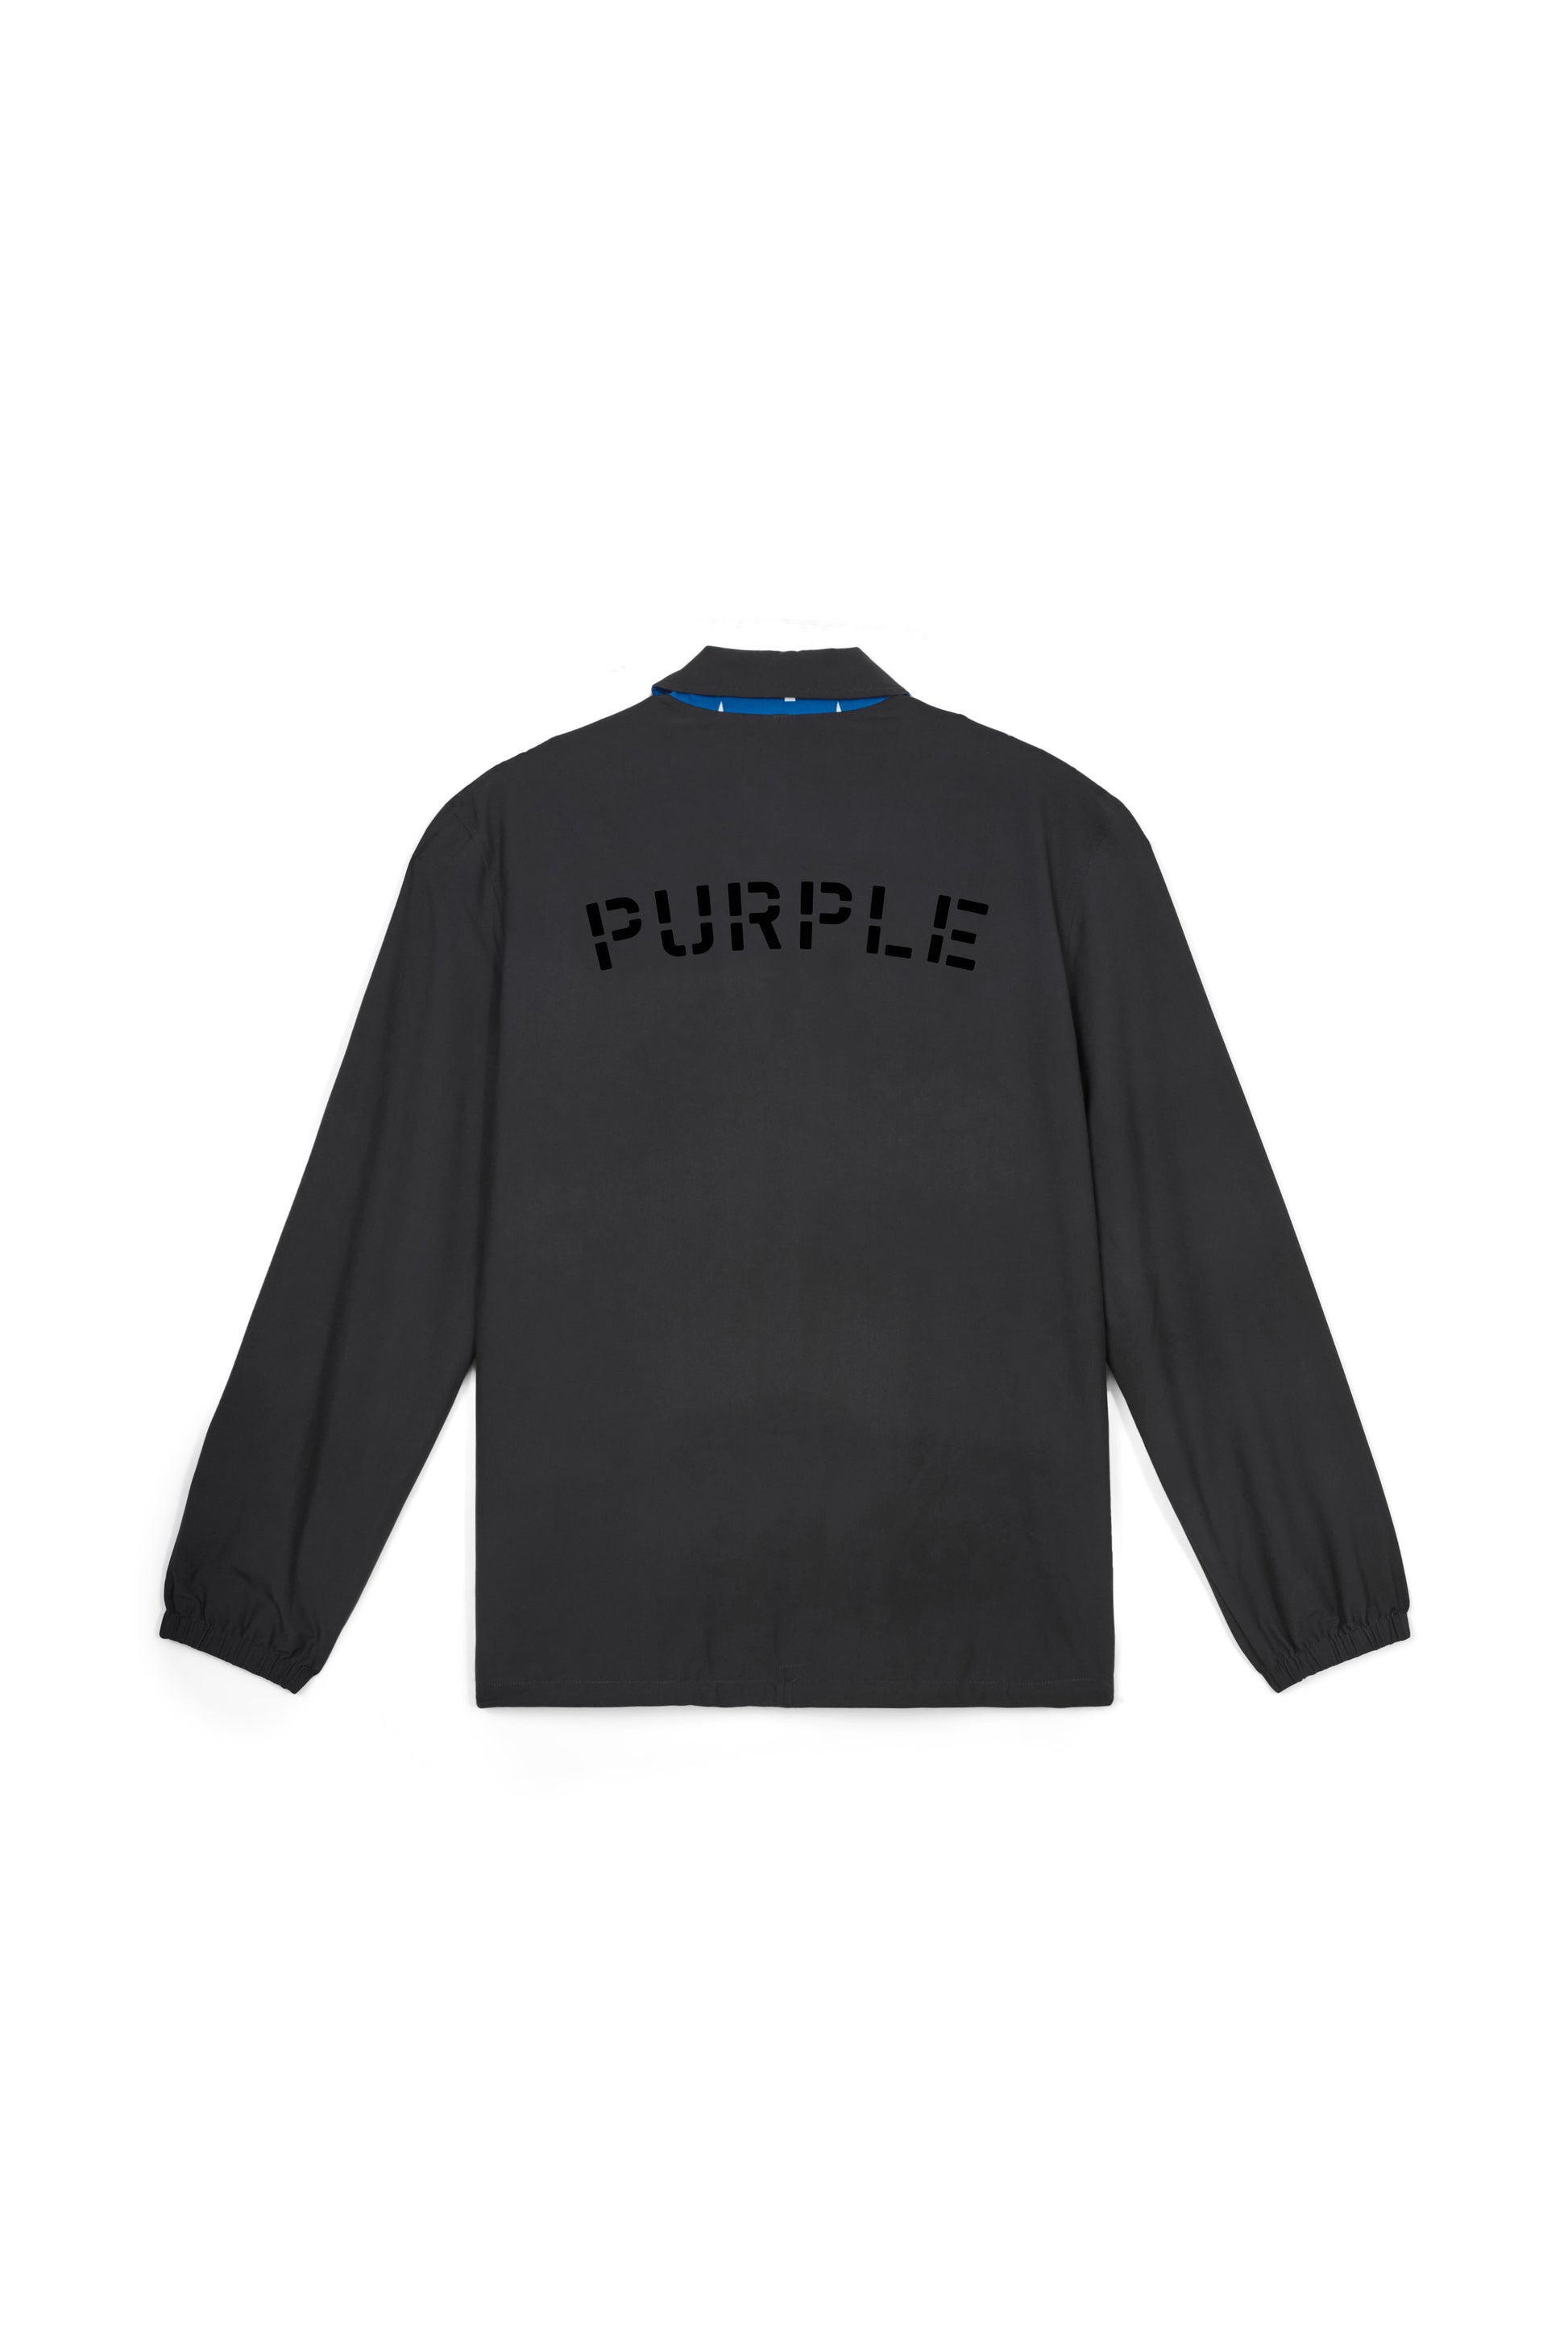 PURPLE BRAND - Men's Coaches Jacket - Style No. P602 - Black Reversible Snap Front - Back